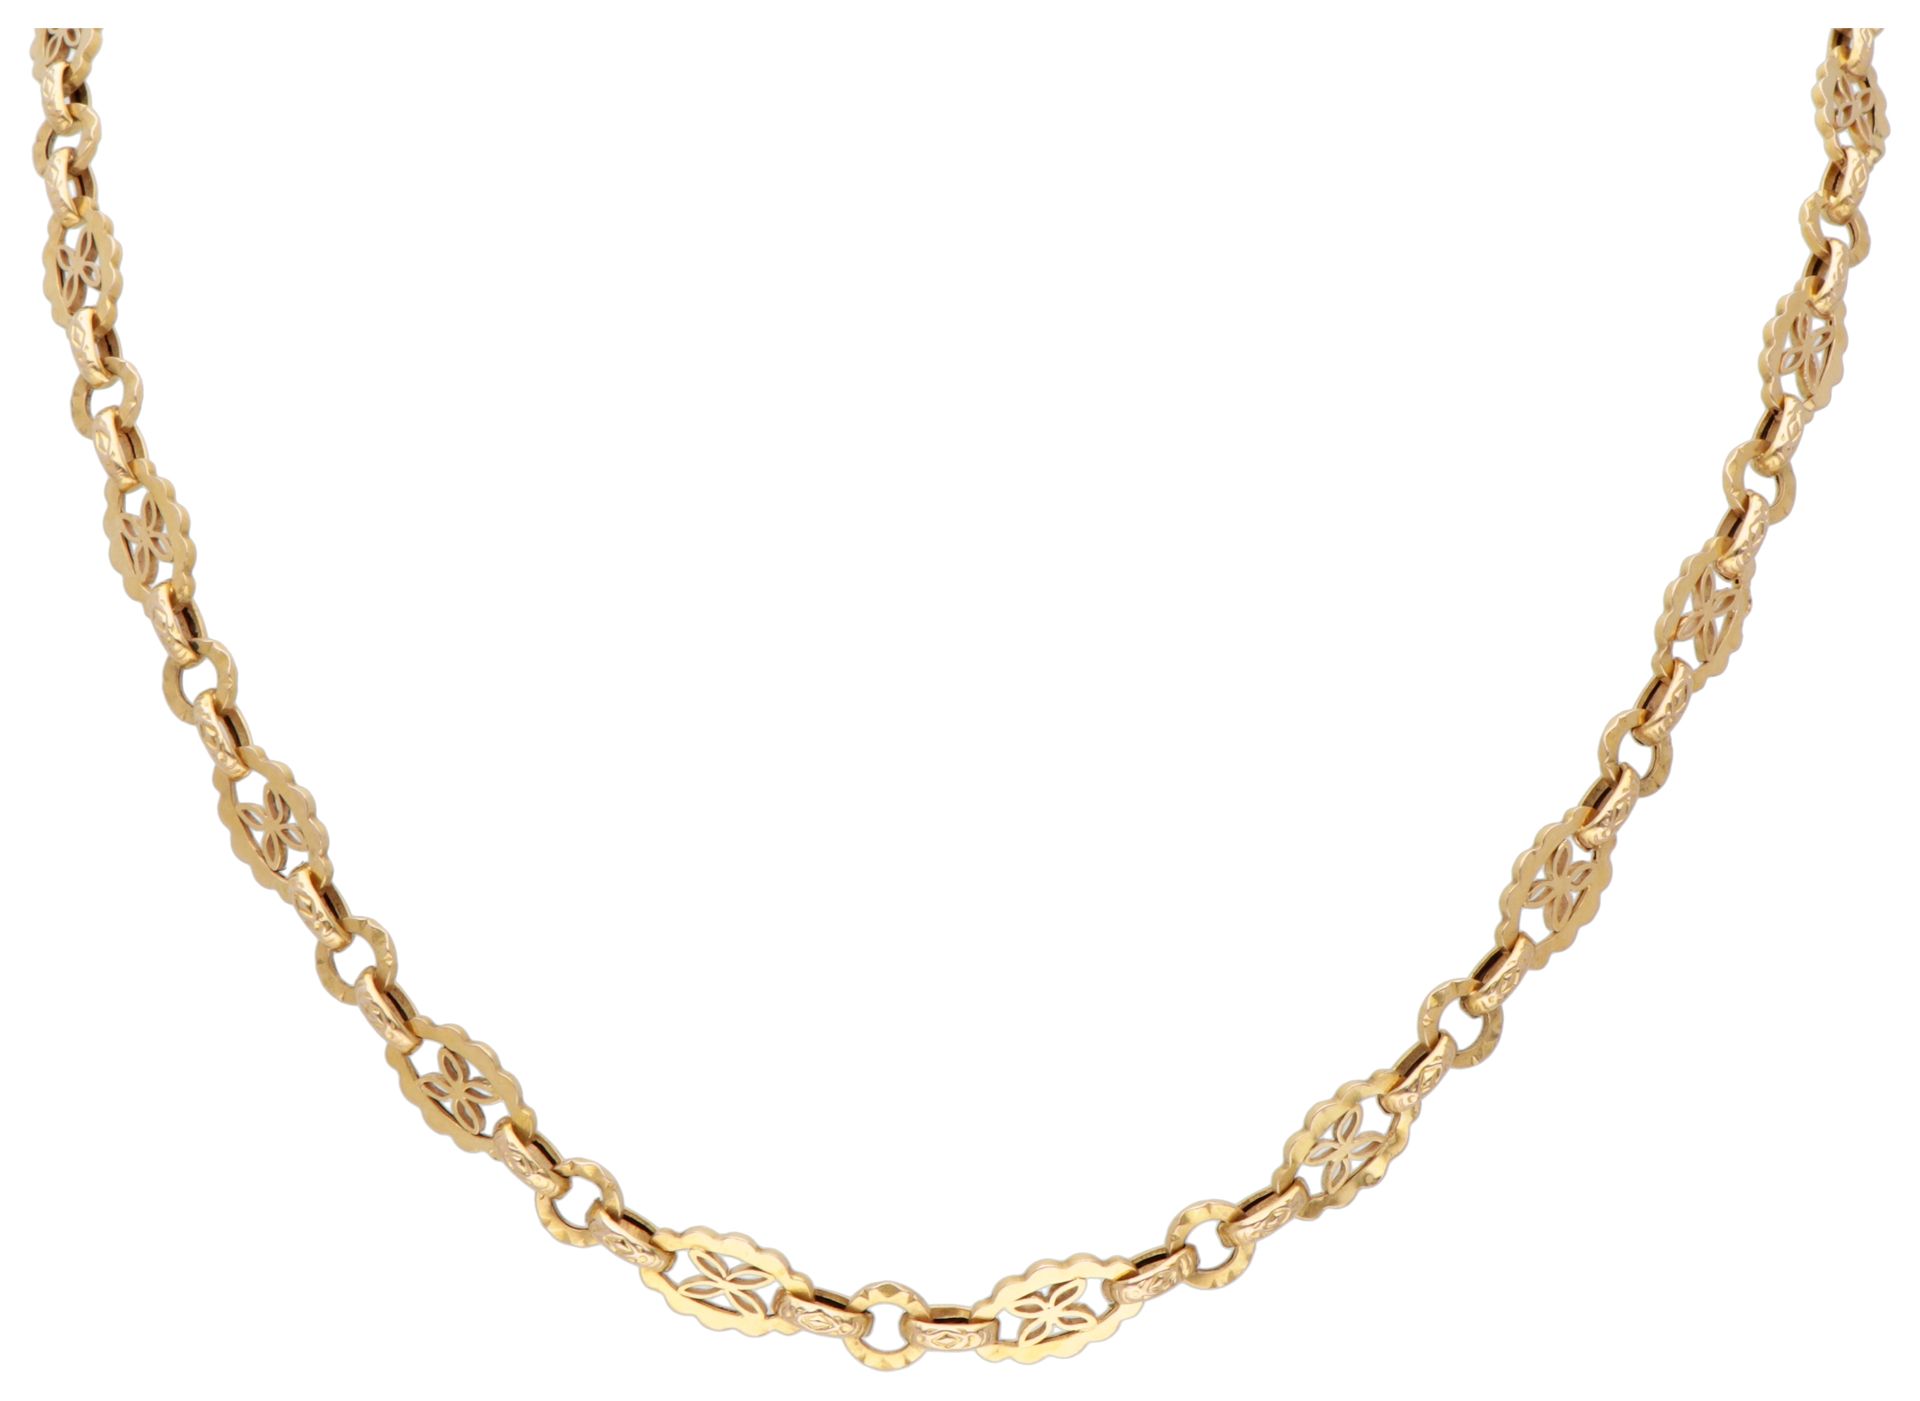 18K. Yellow gold link necklace with ornate details. Hallmarks: 750. L: 78 cm, li&hellip;